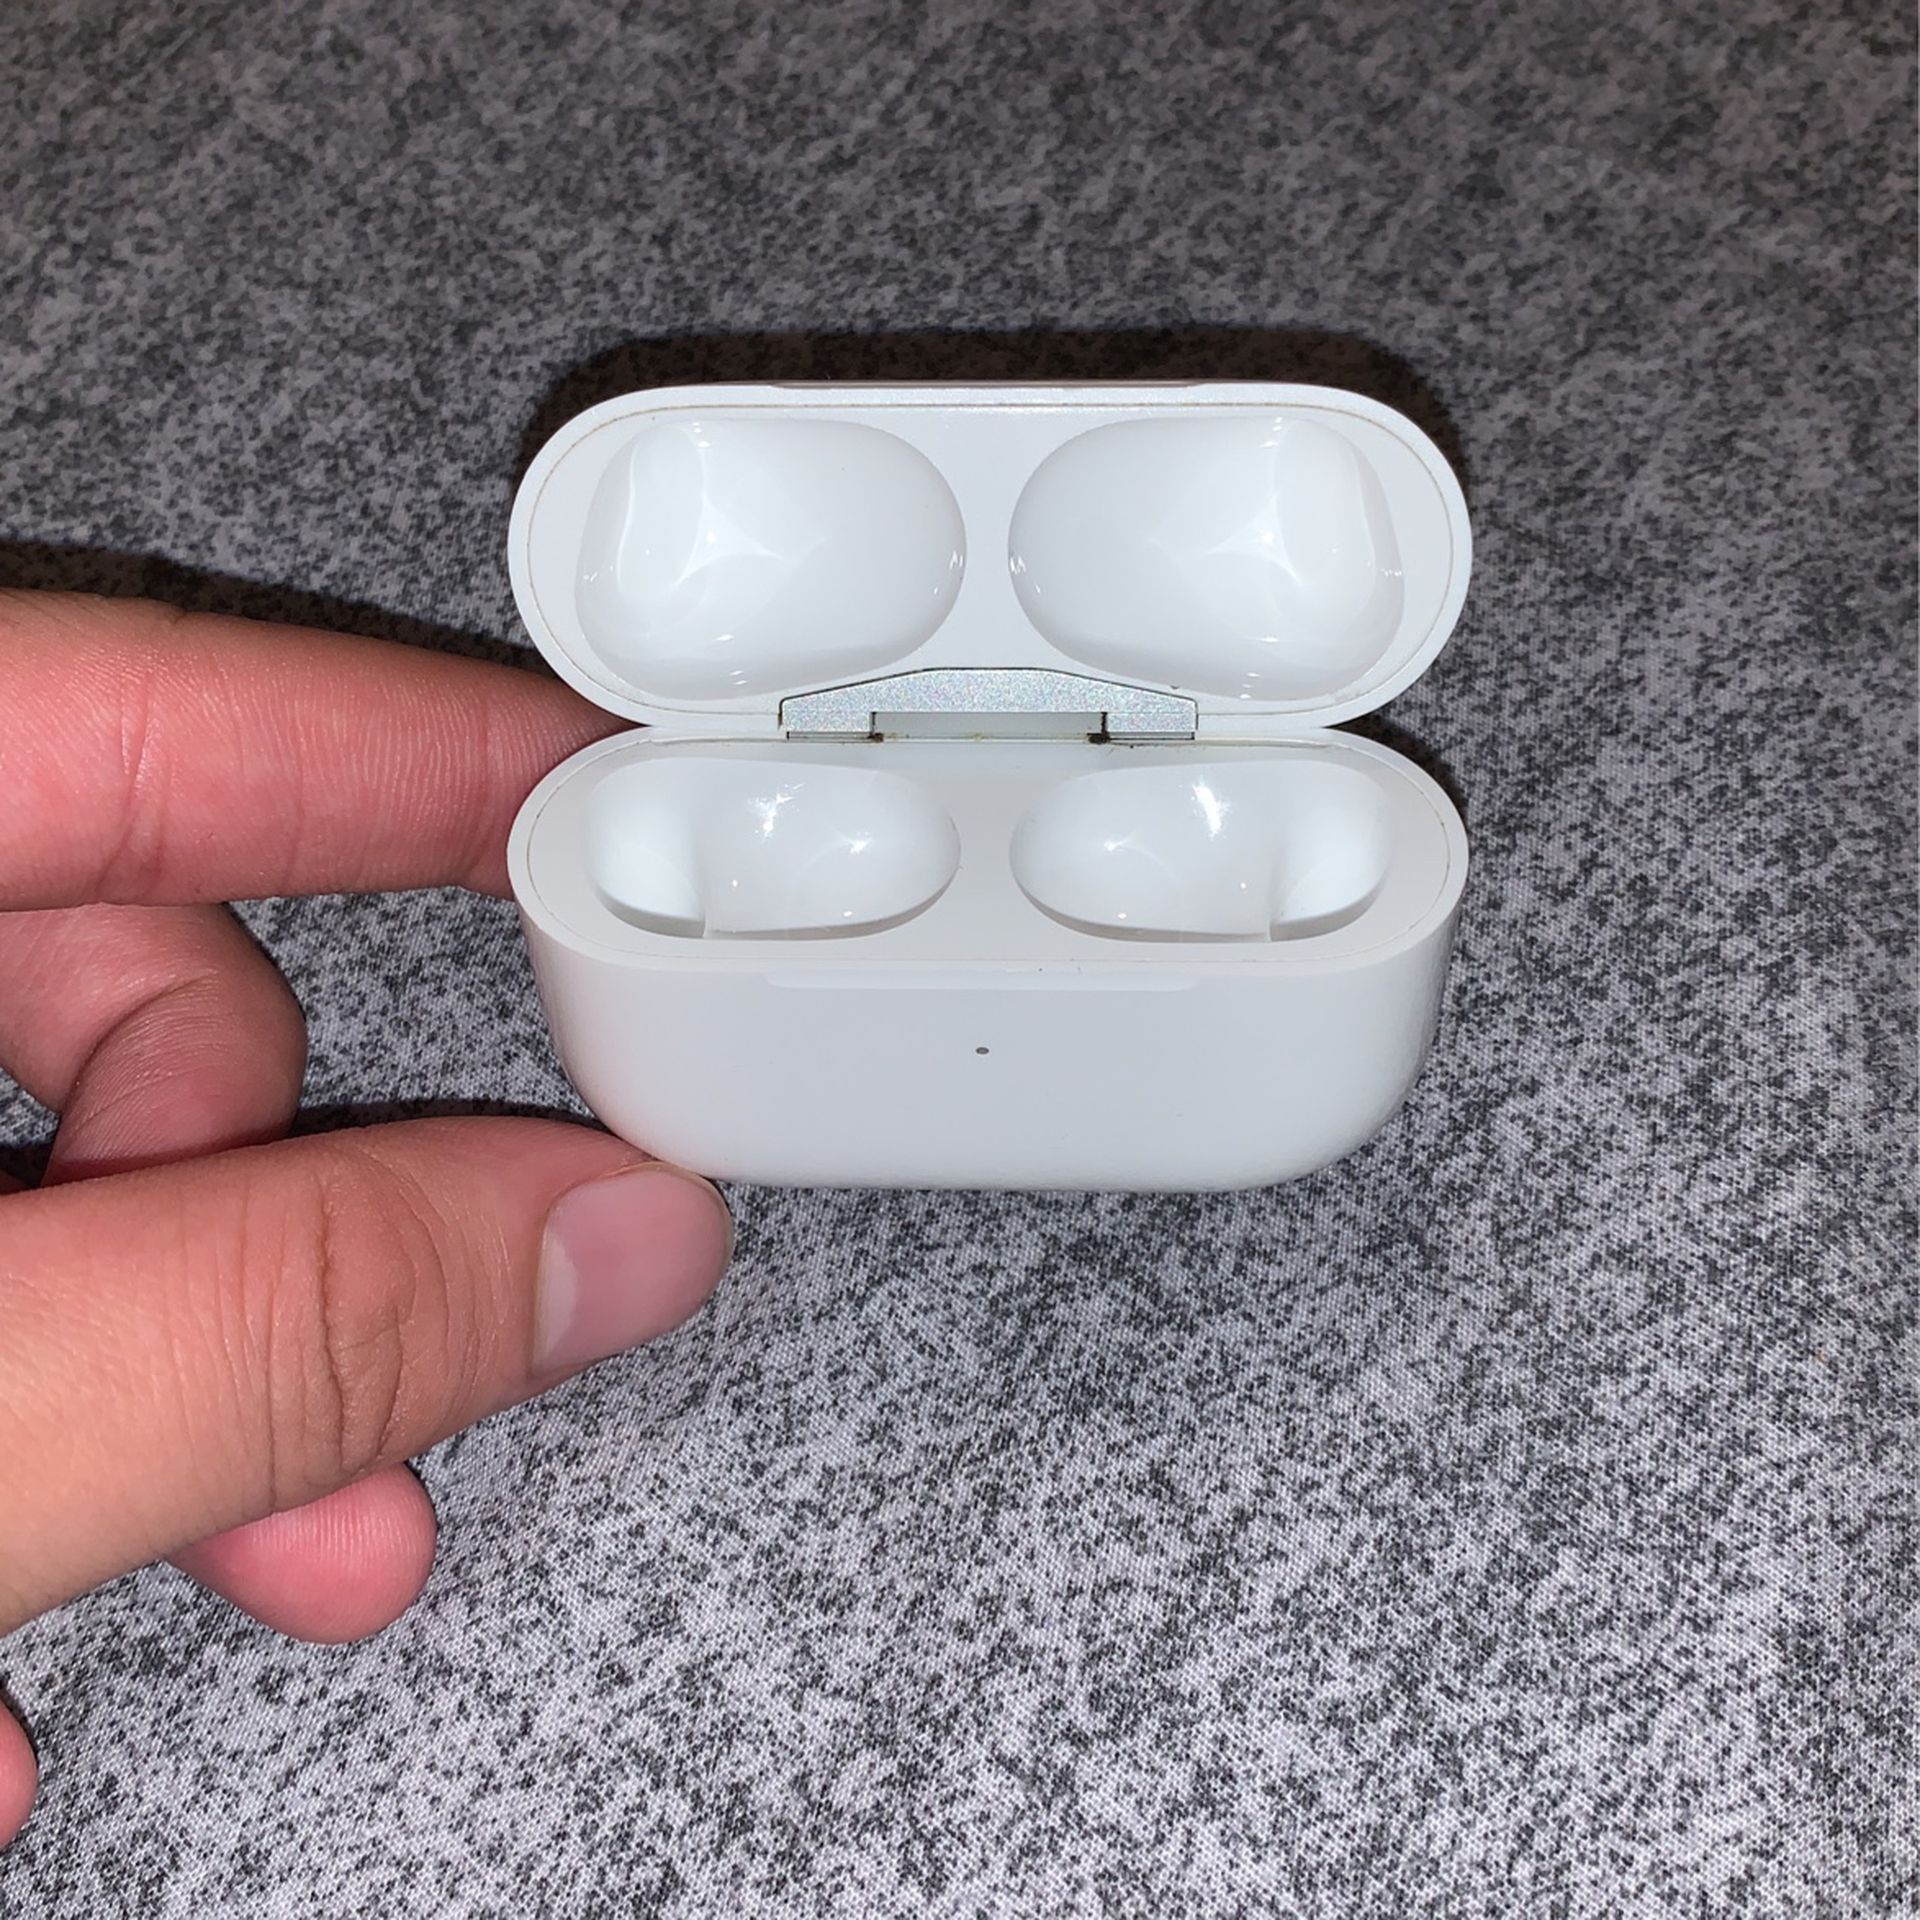 air pod pro case (No earbuds/air pod)